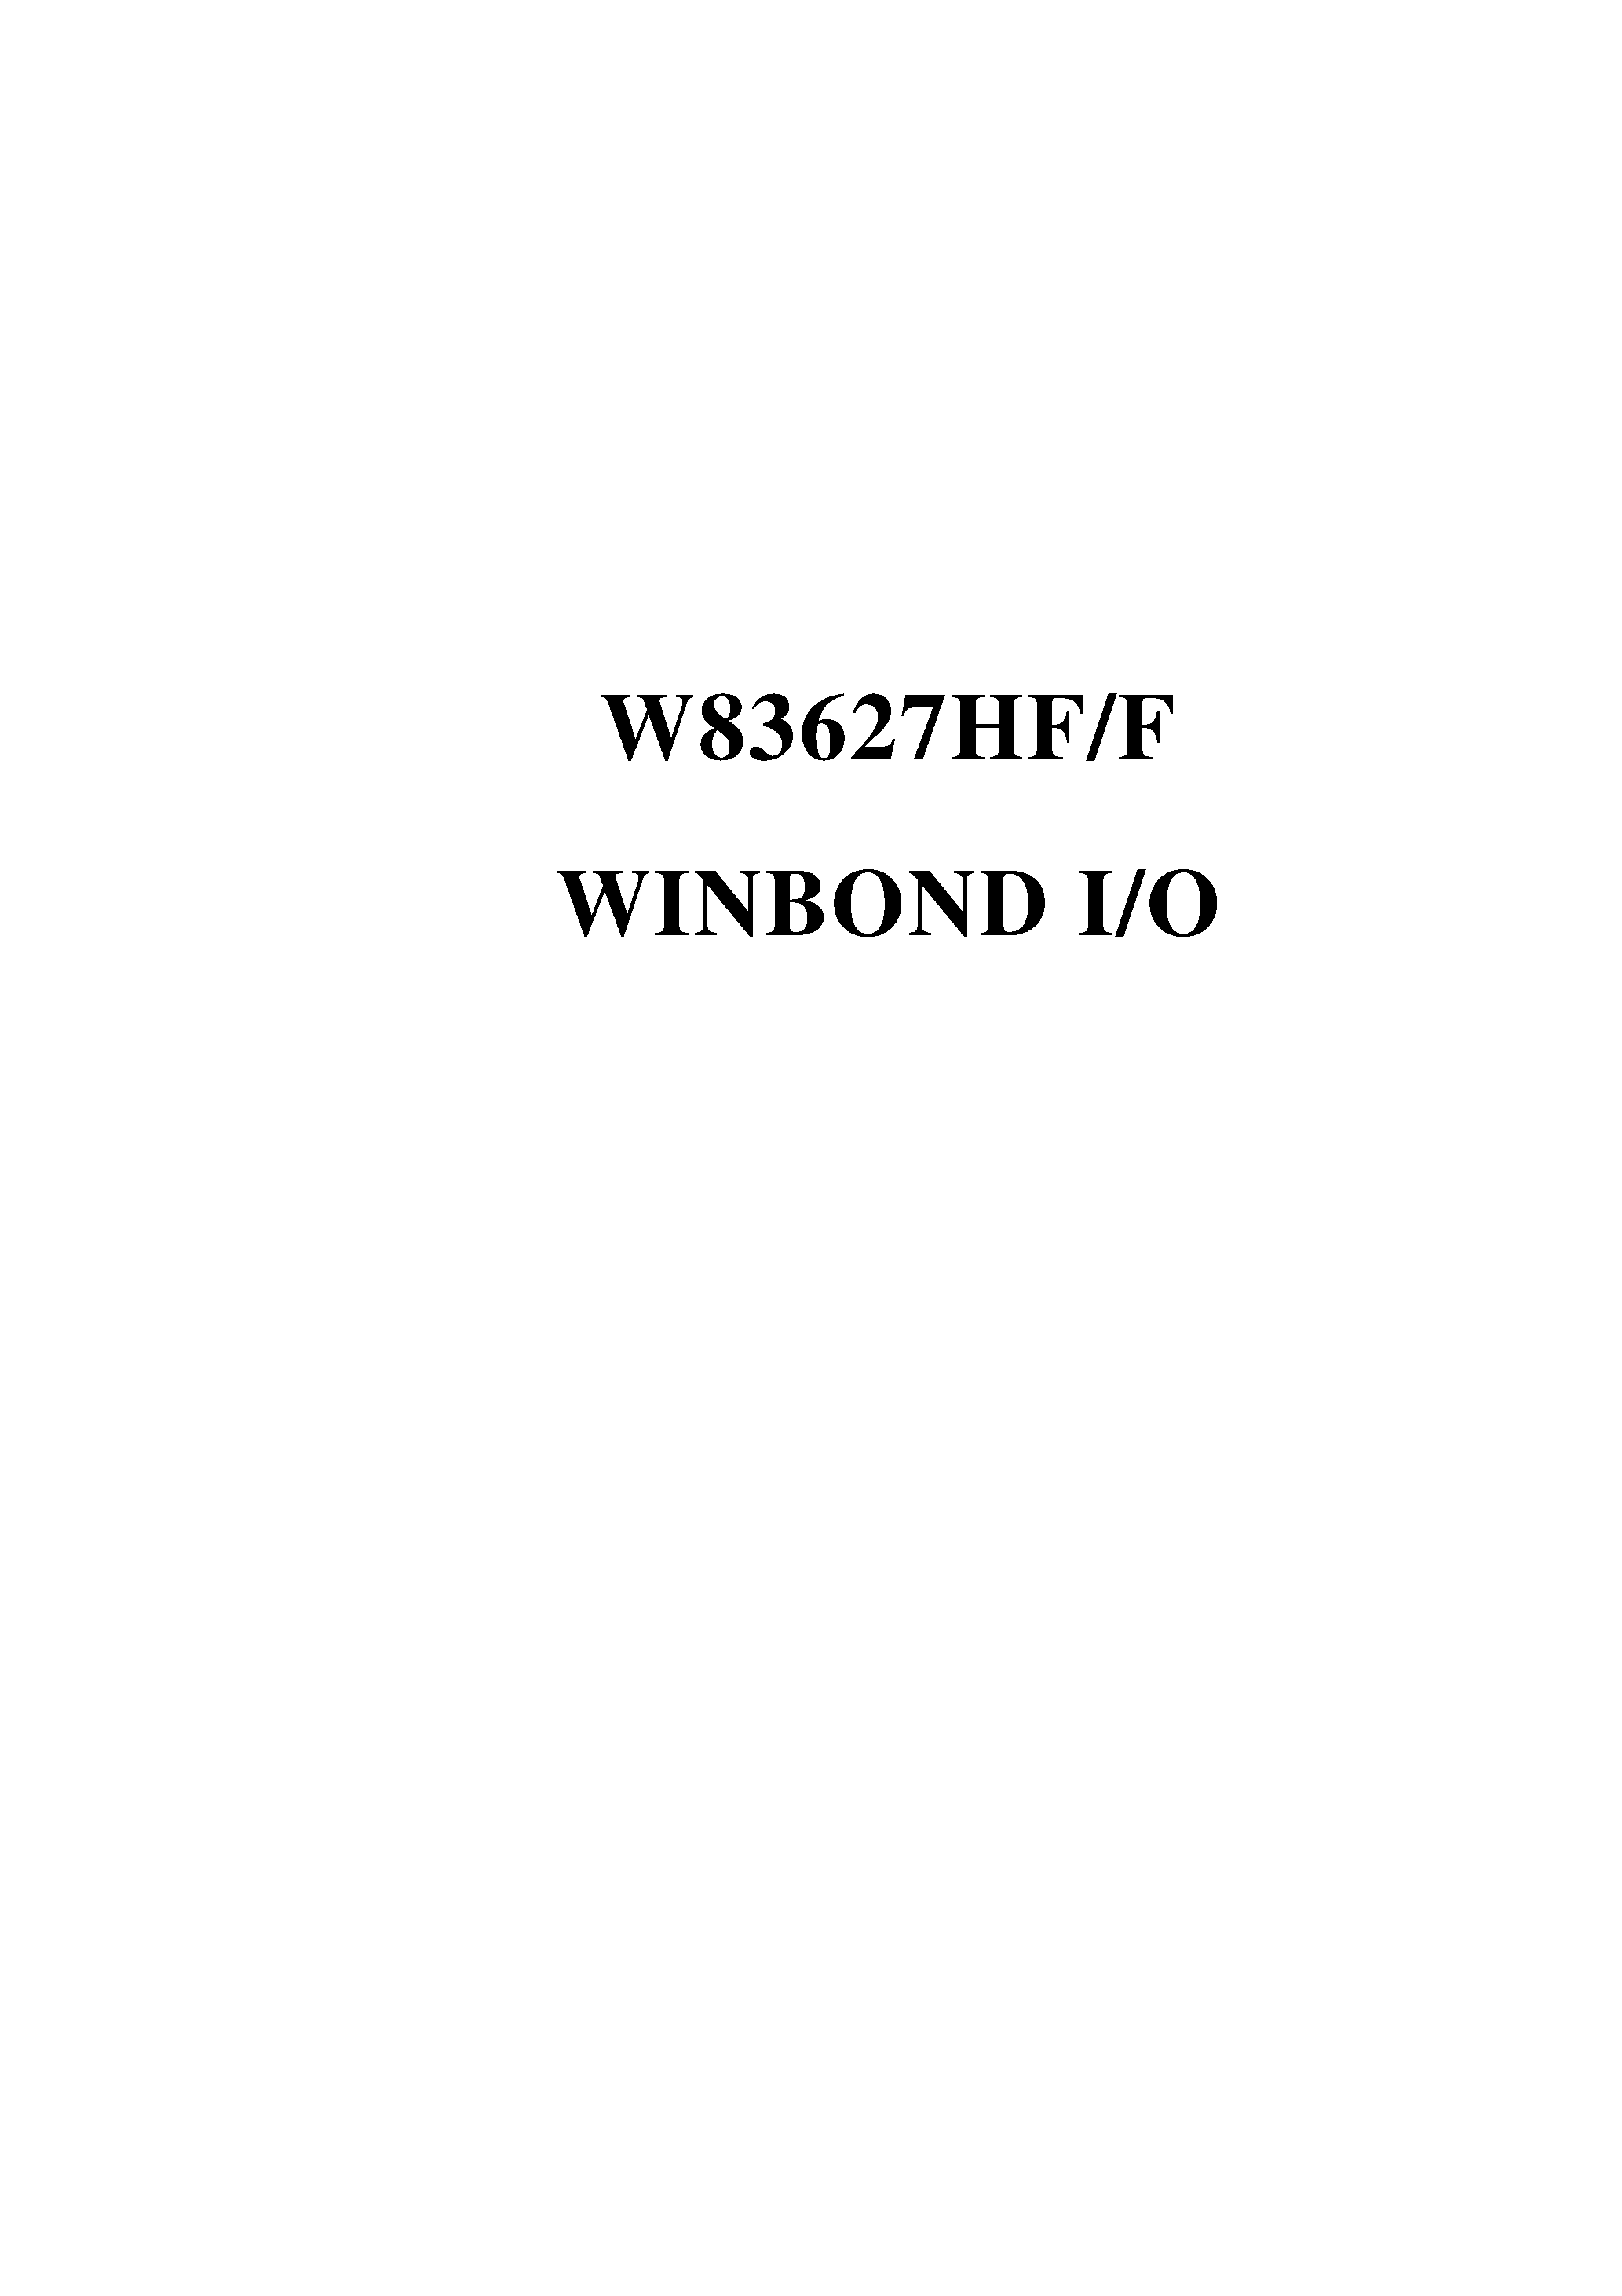 Datasheet W83627HF-PW - WINBOND I/O page 1